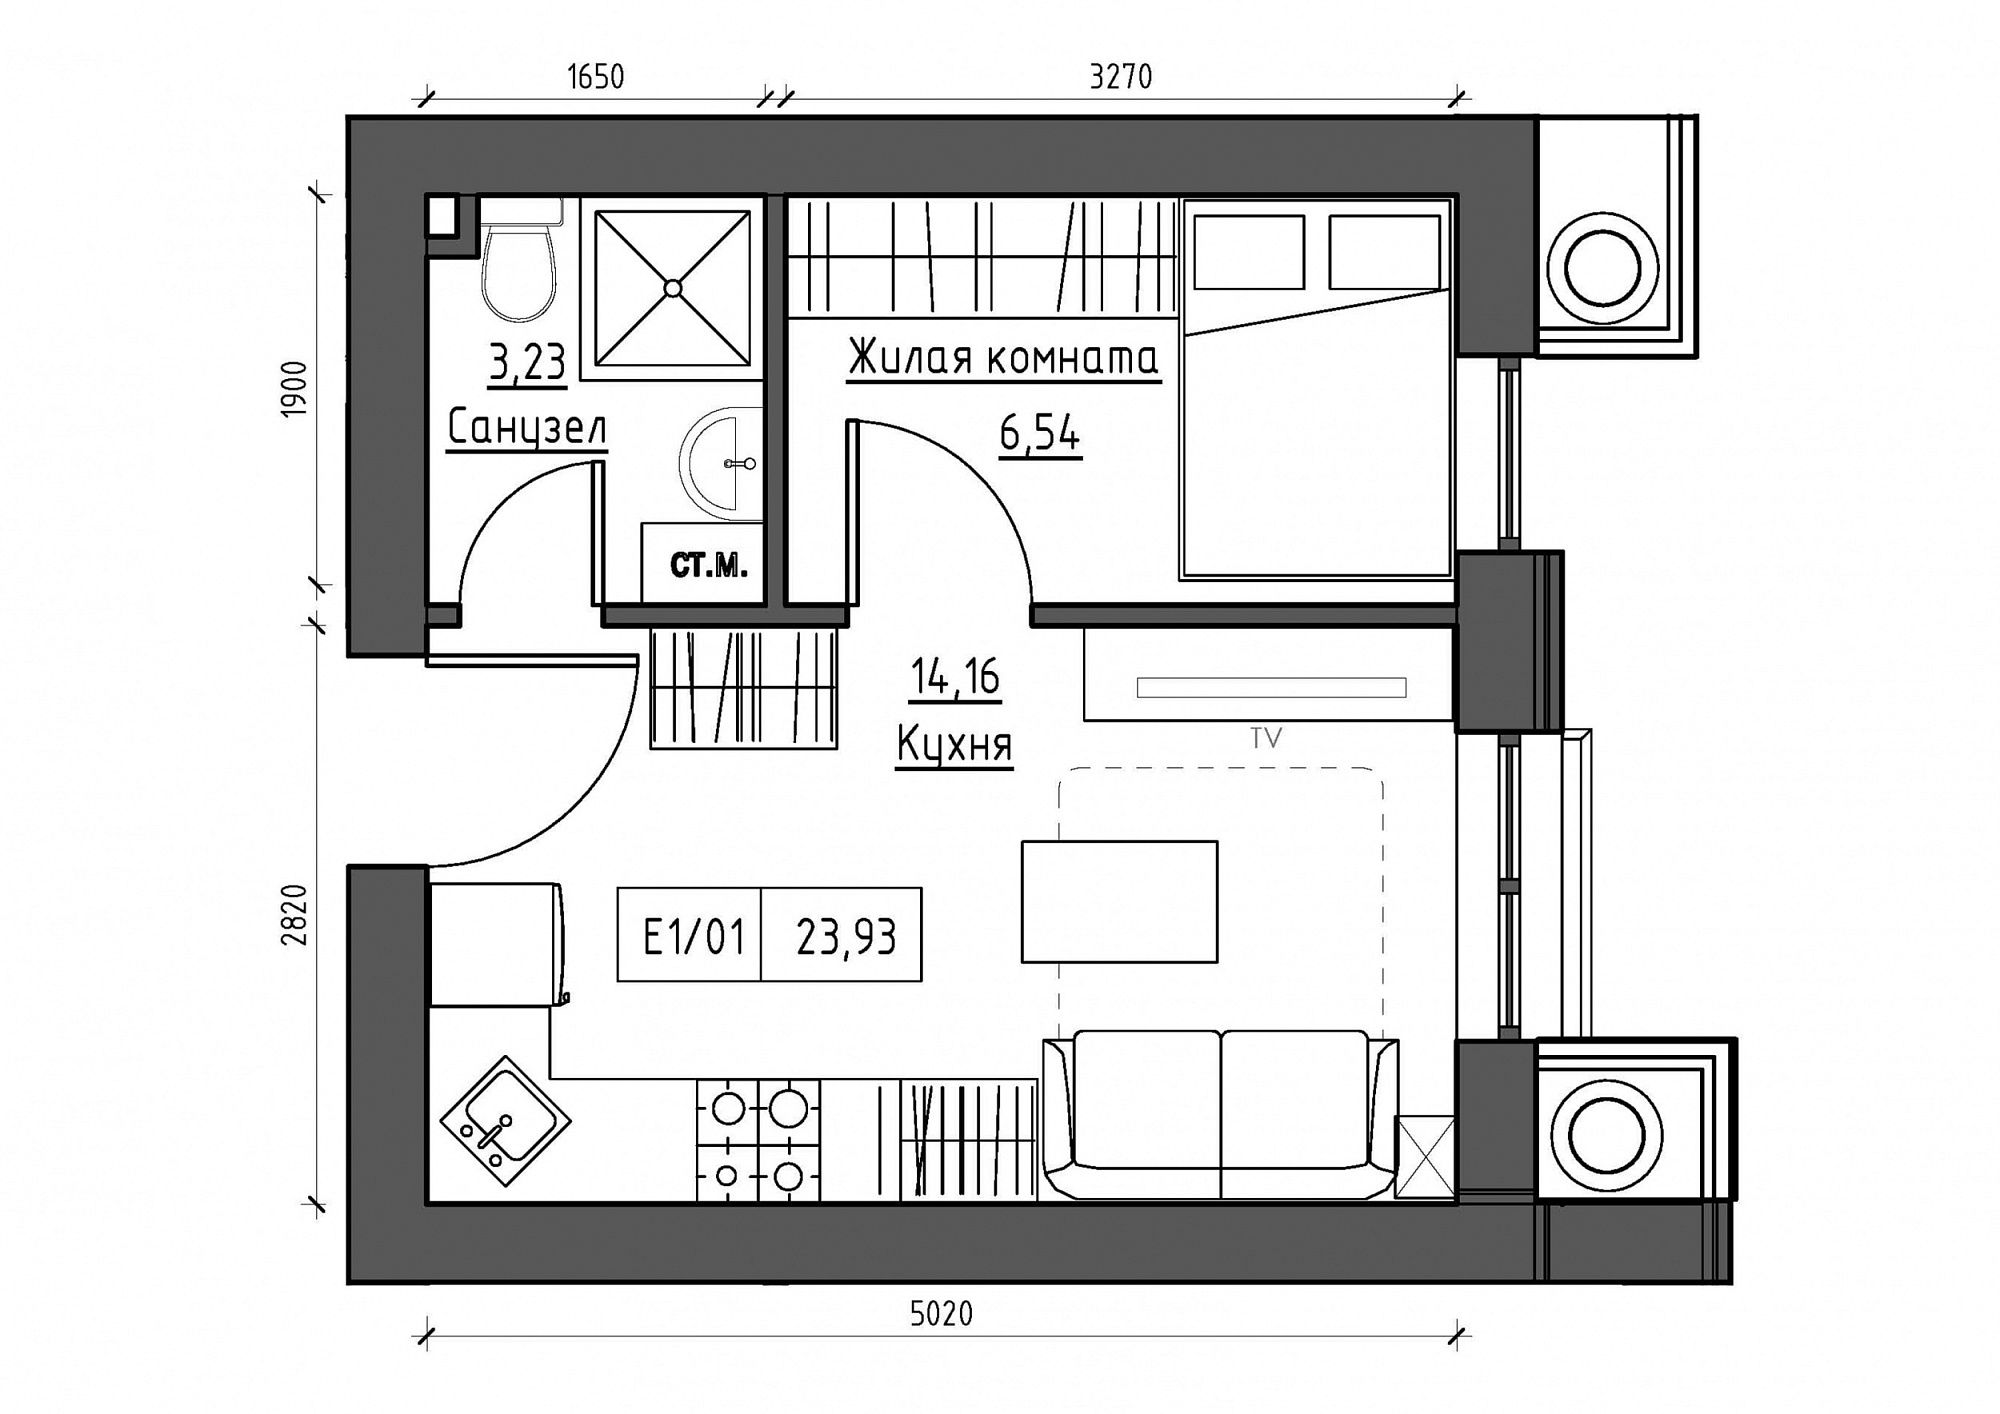 Planning 1-rm flats area 23.93m2, KS-011-04/0004.